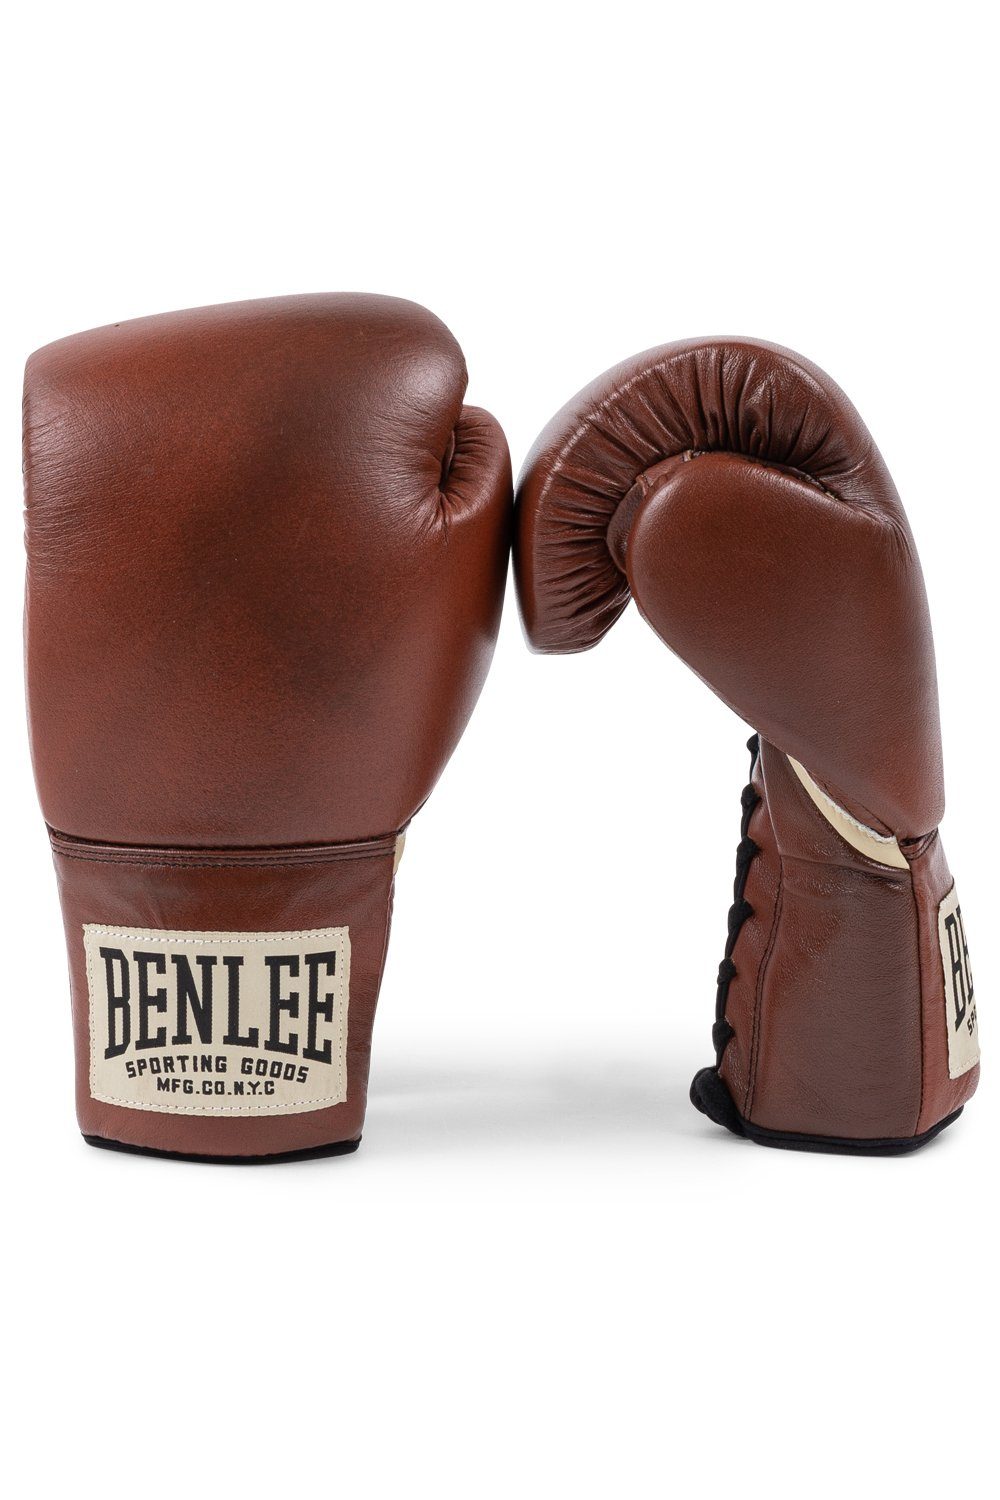 Benlee Rocky Marciano Boxhandschuhe PREMIUM CONTEST